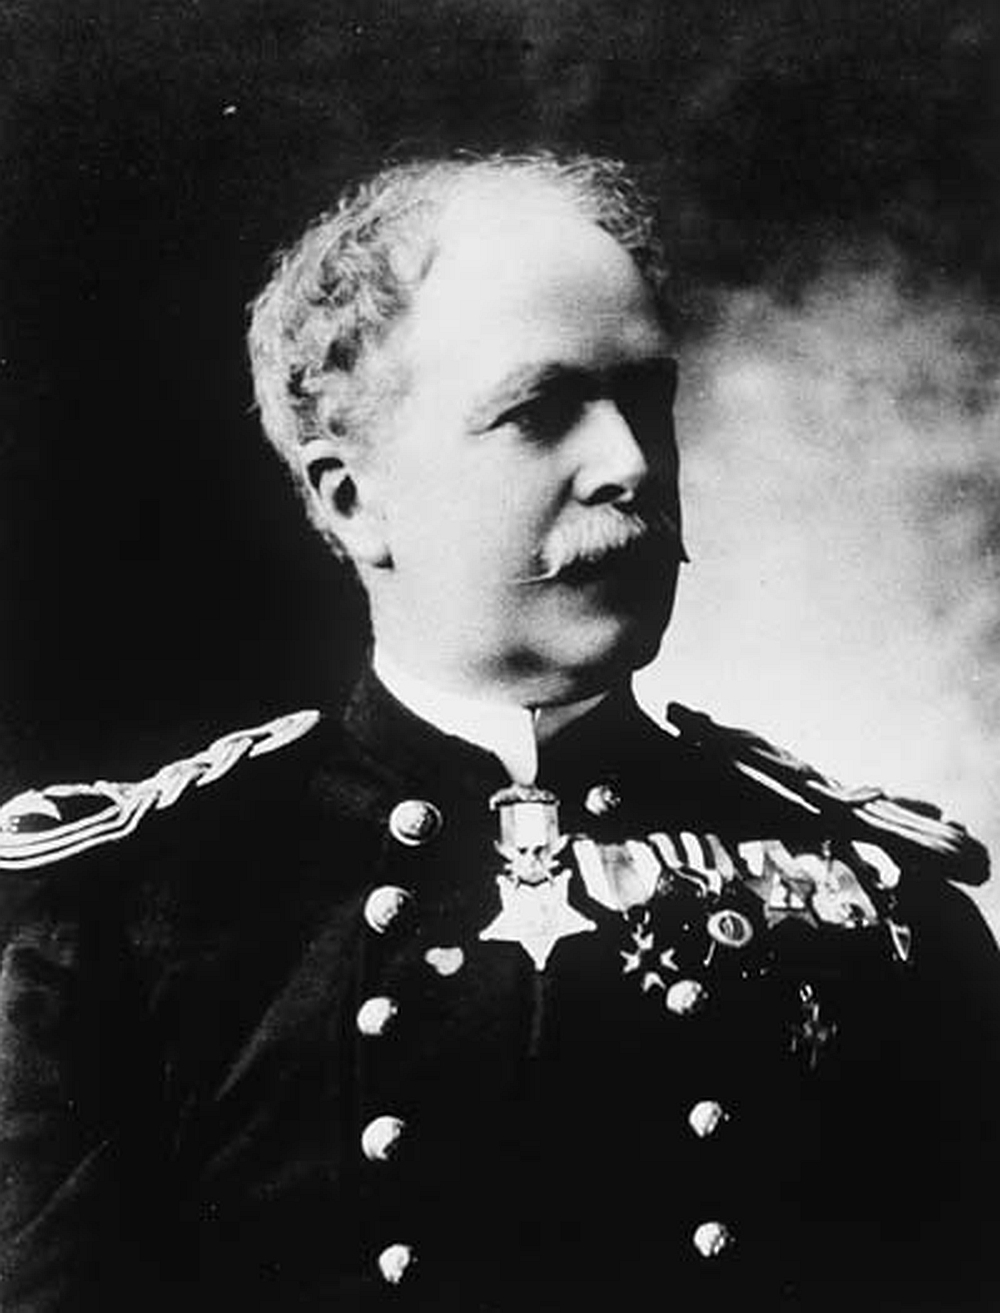 Col. B.J.D. Irwin